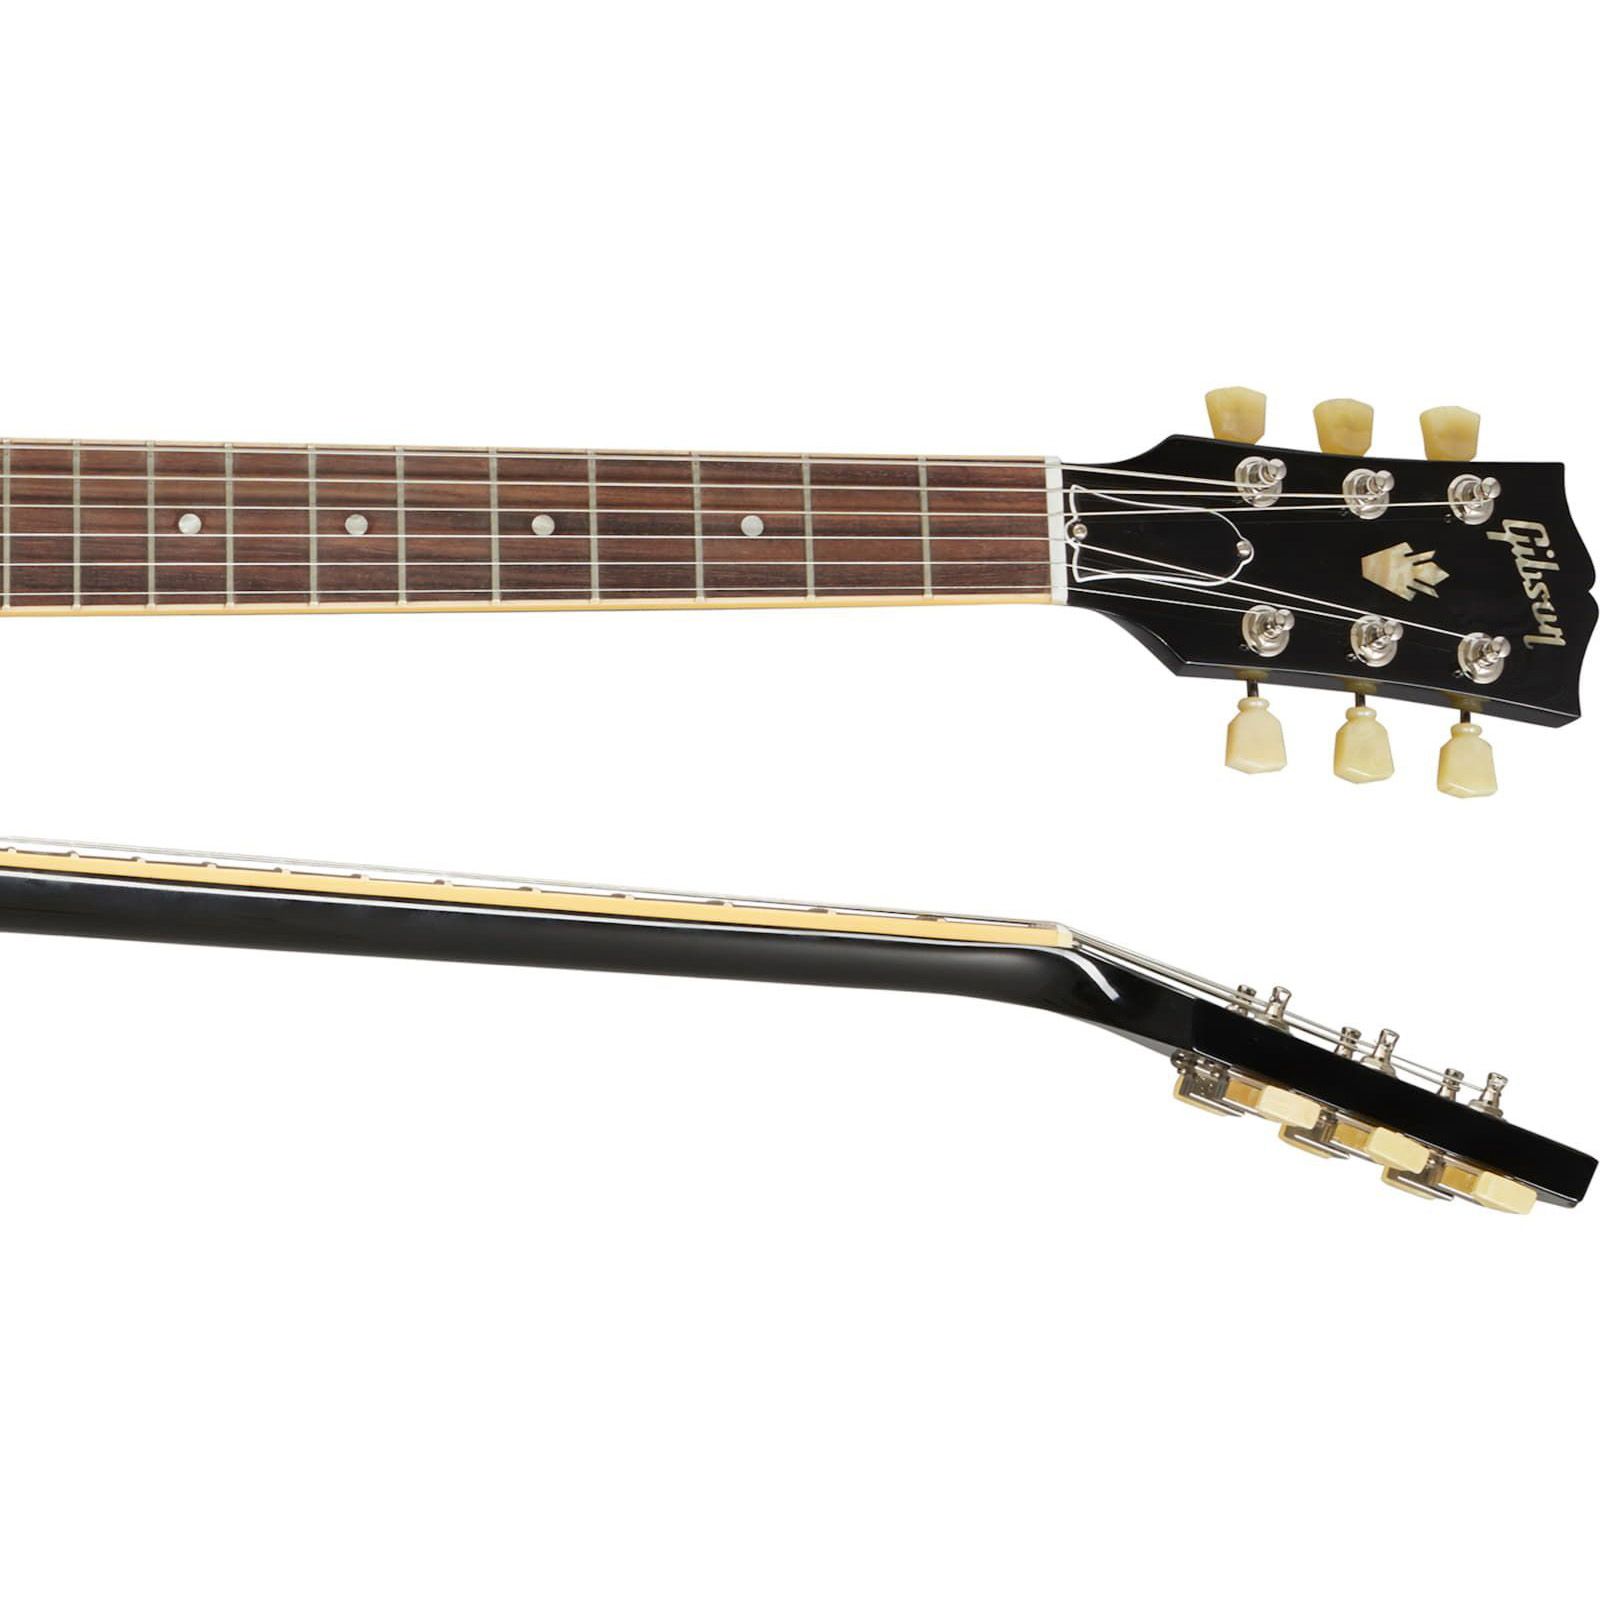 Gibson ES-335 Vintage Ebony Электрогитары